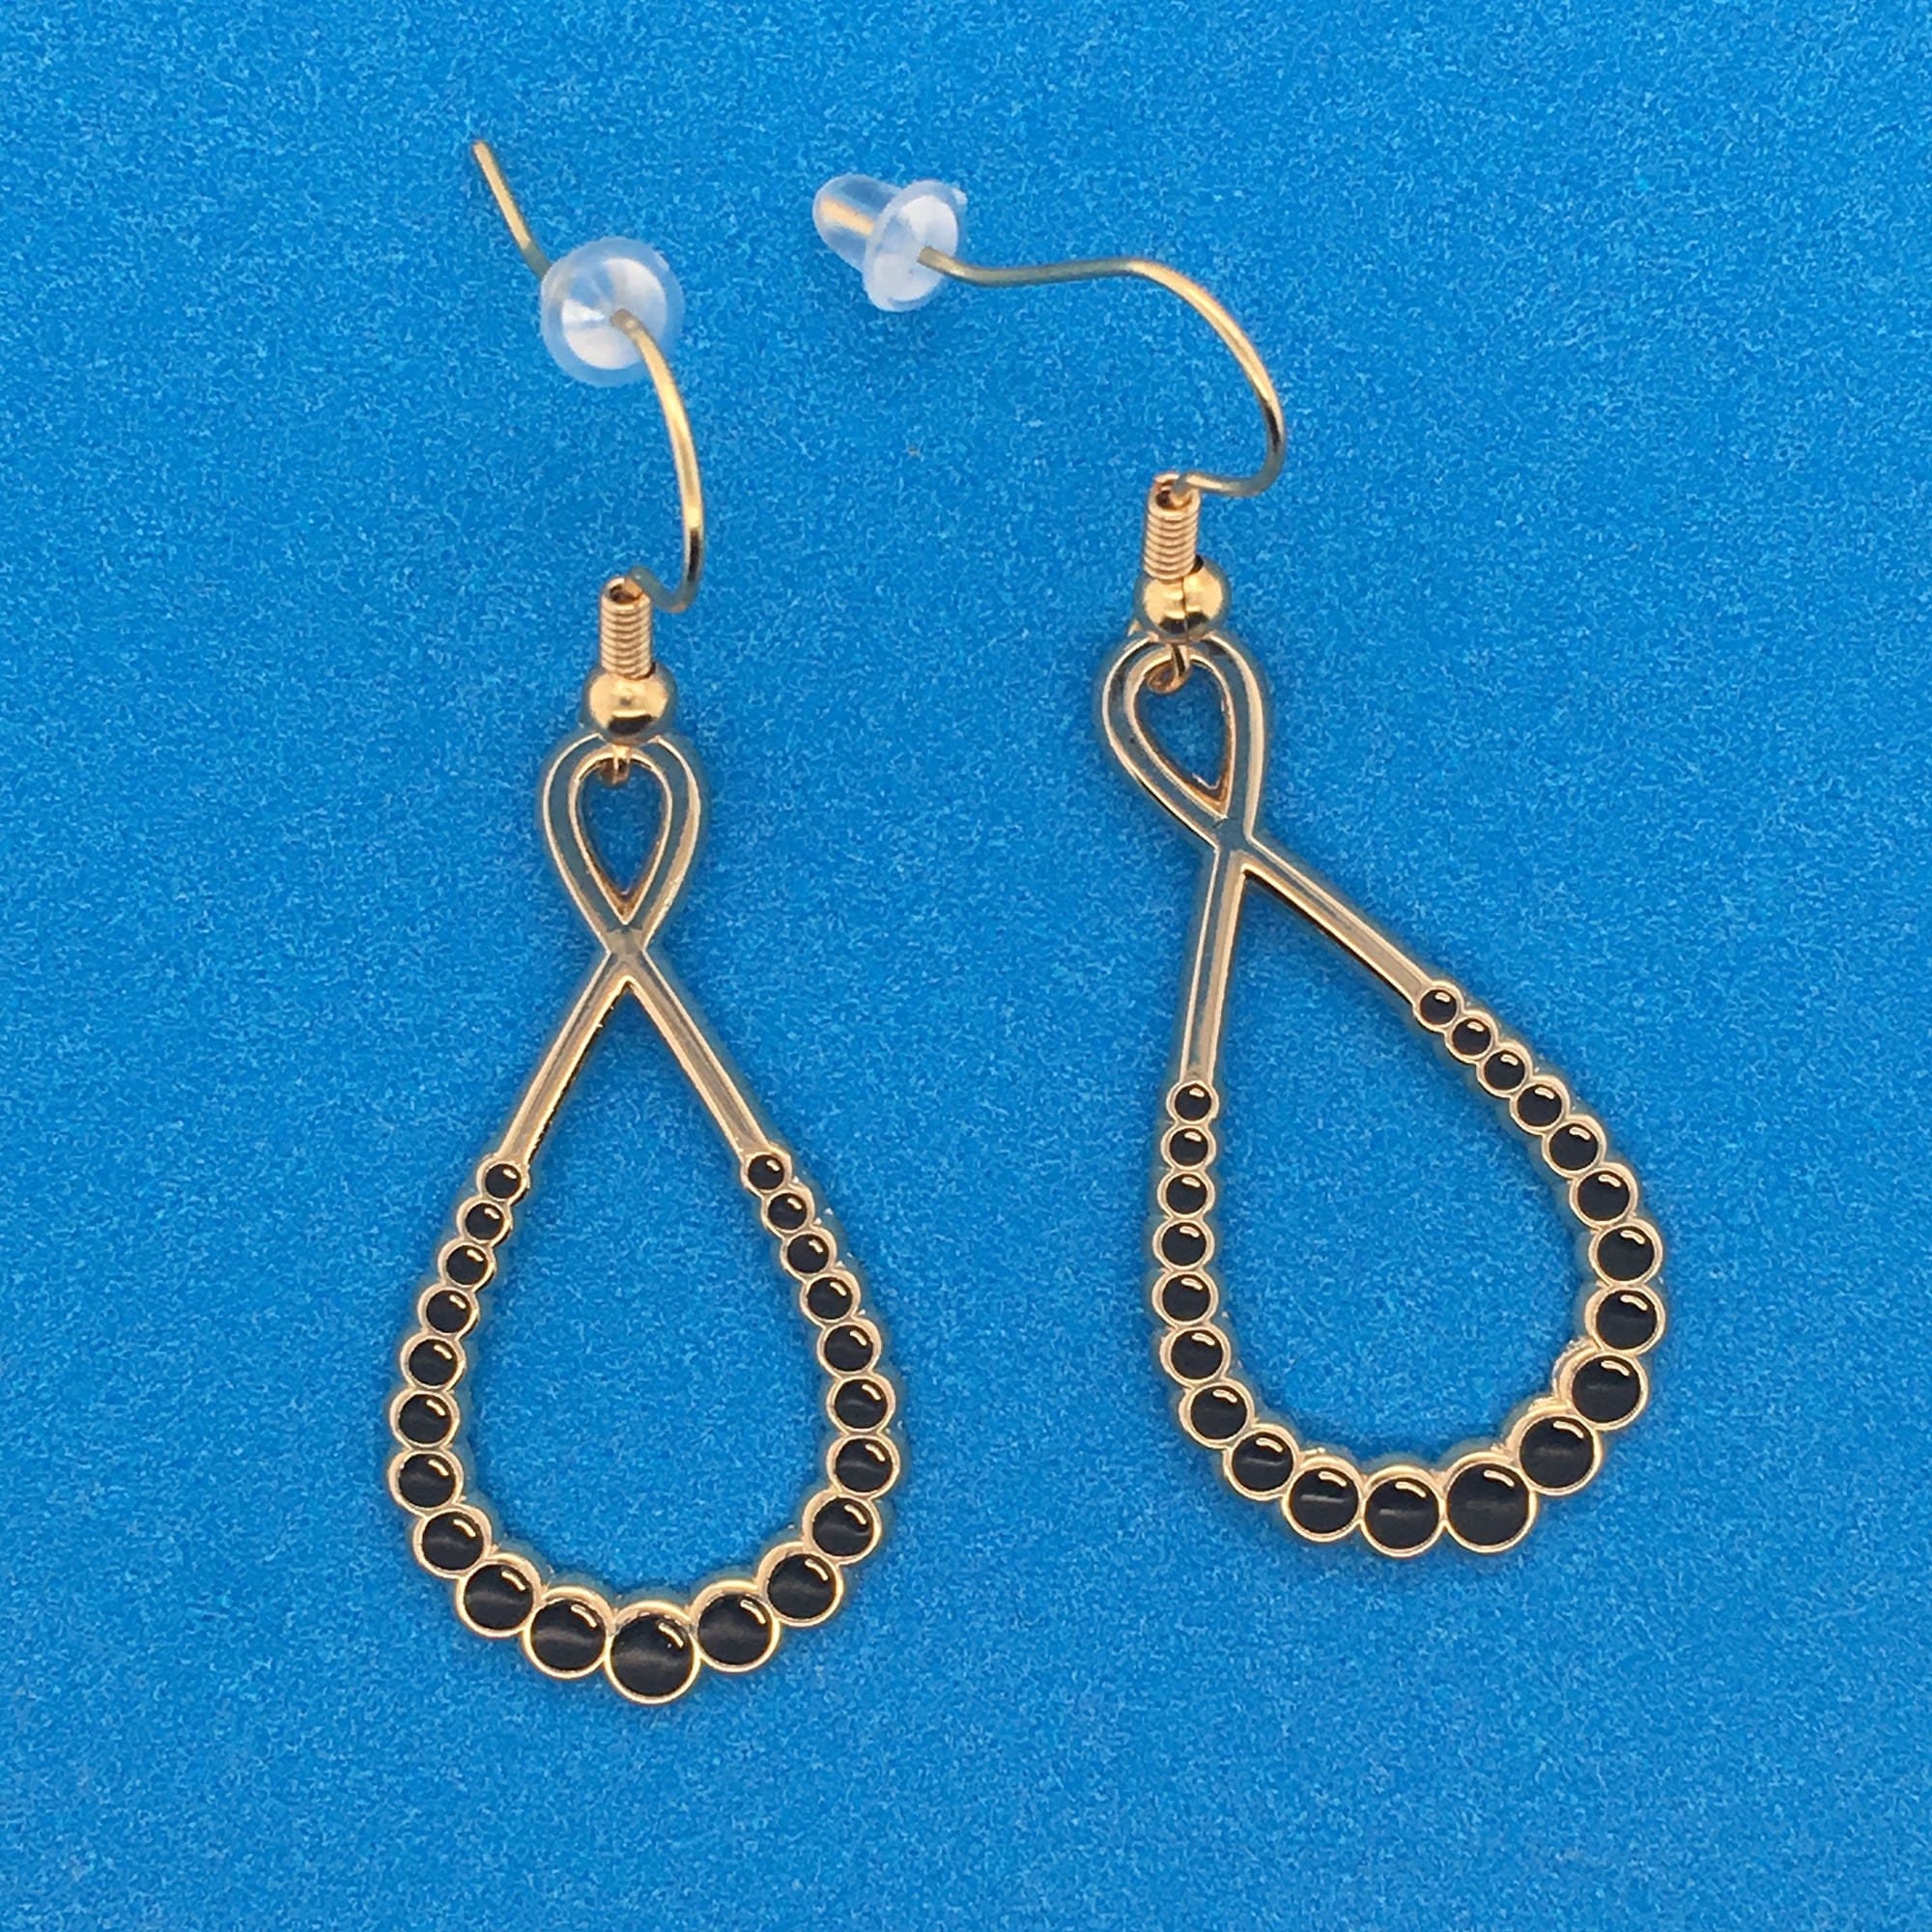 Kamala Harris' Black Pearls Drop Earrings